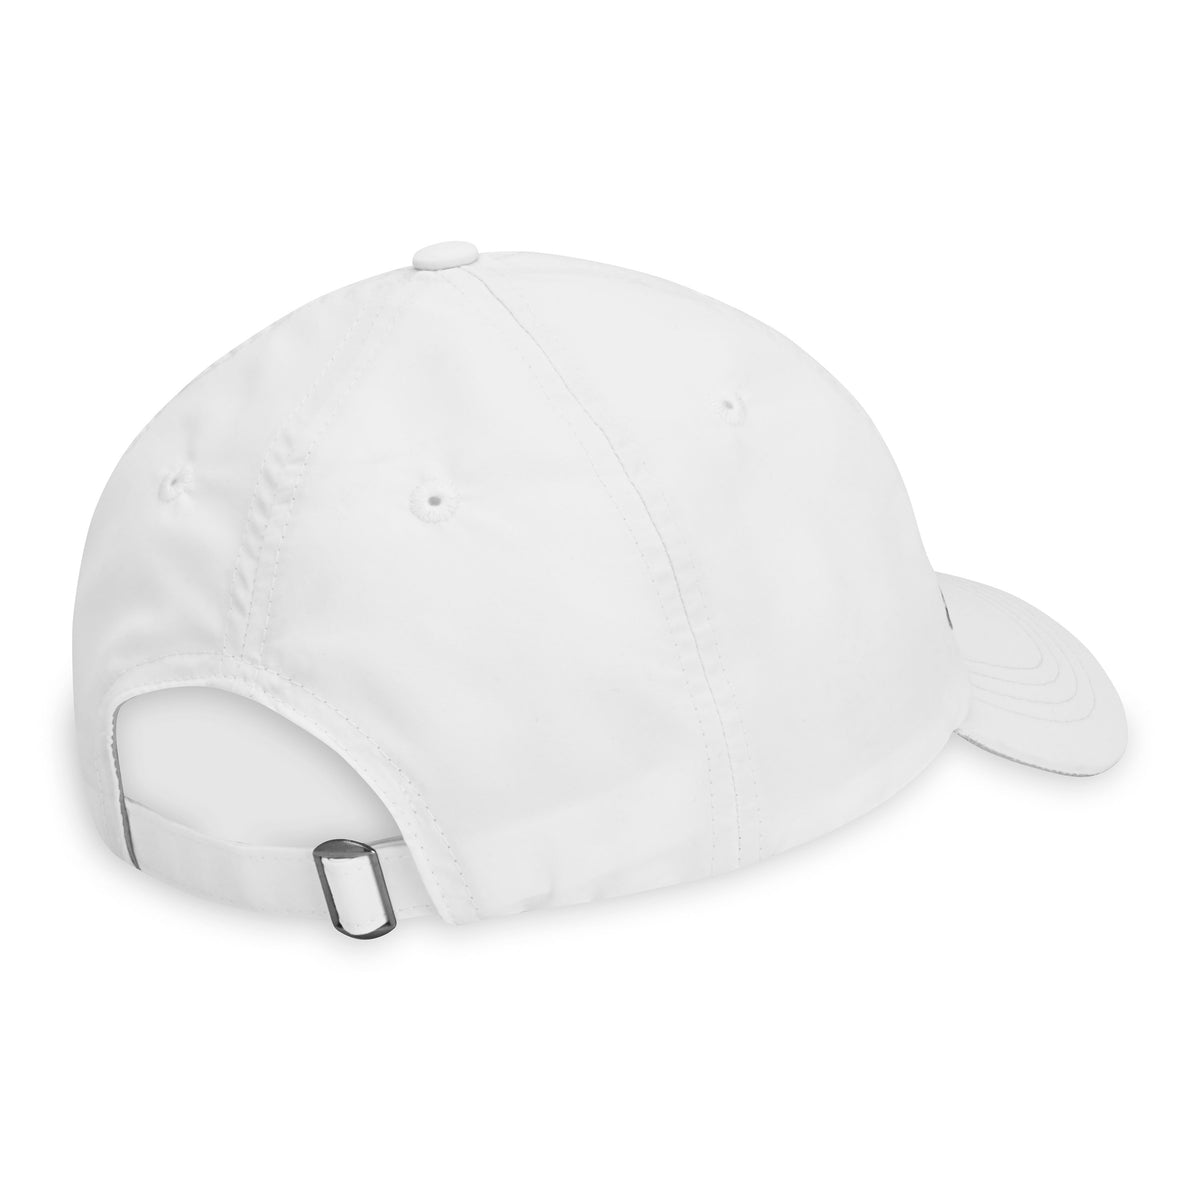 Classic Solara UV Protection Fitness Hat white back